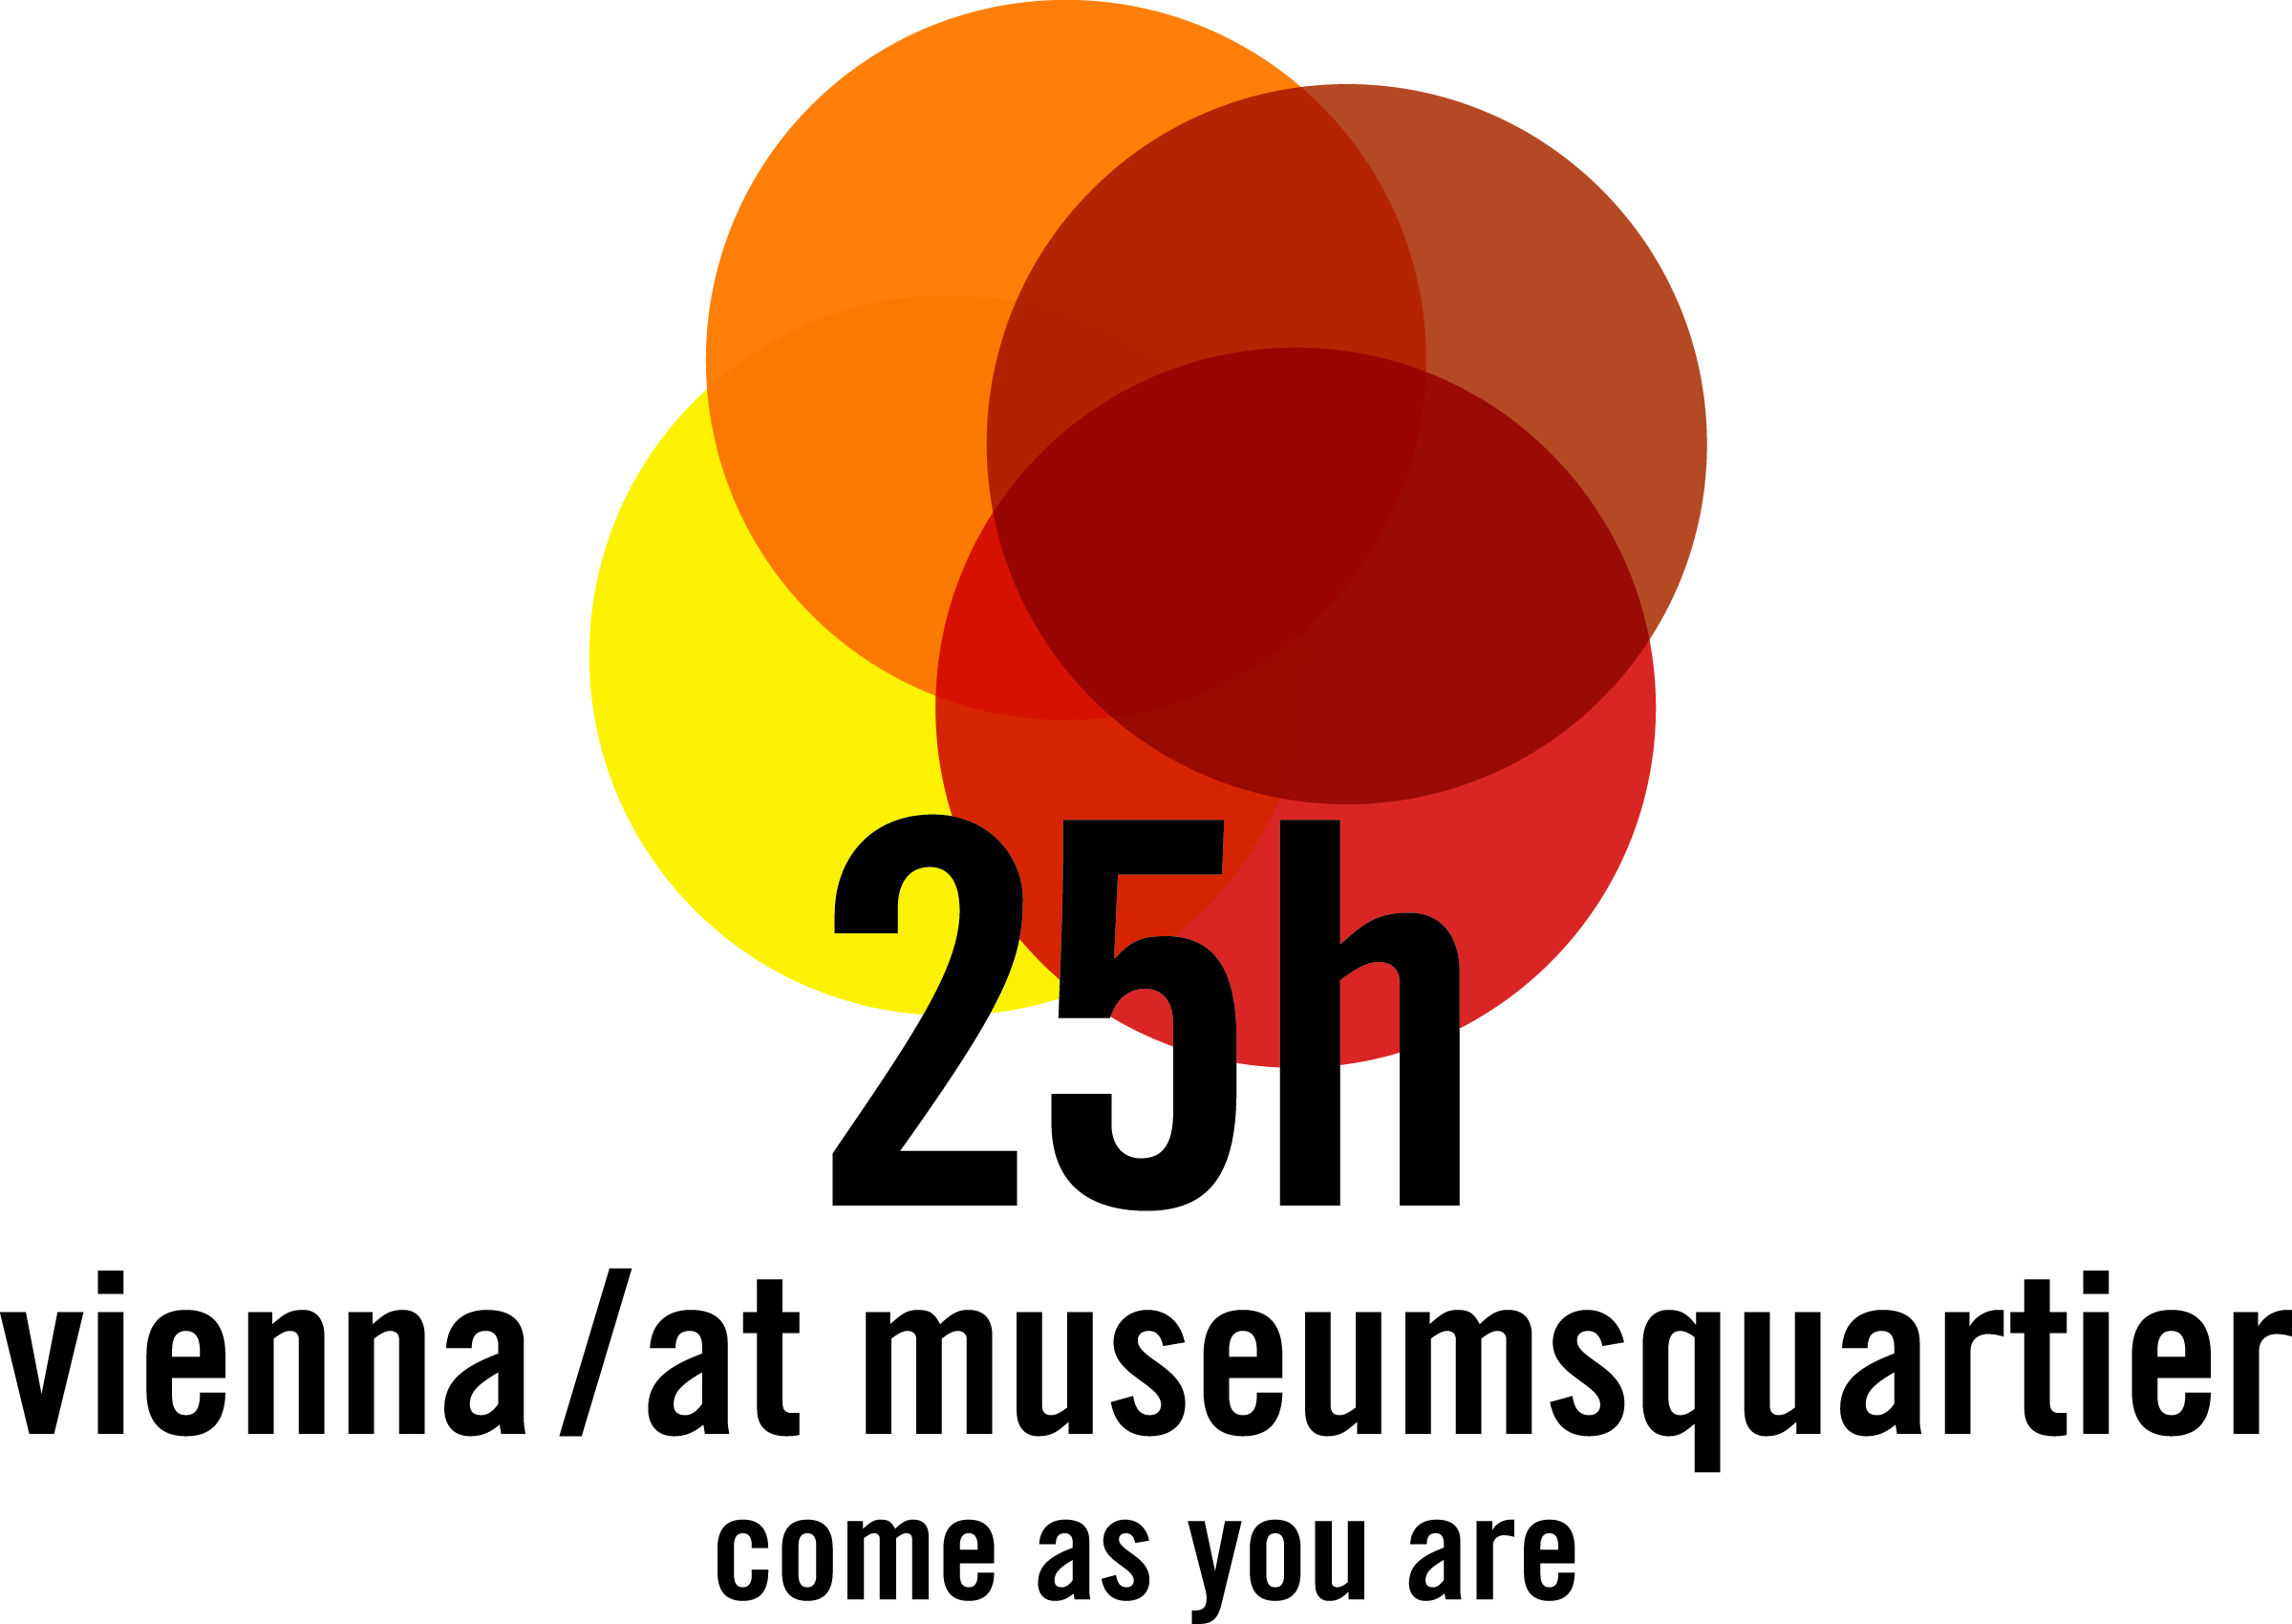 oranger und roter halbkreis mit schrift: 25h vienna/at museumsquartier come as you are